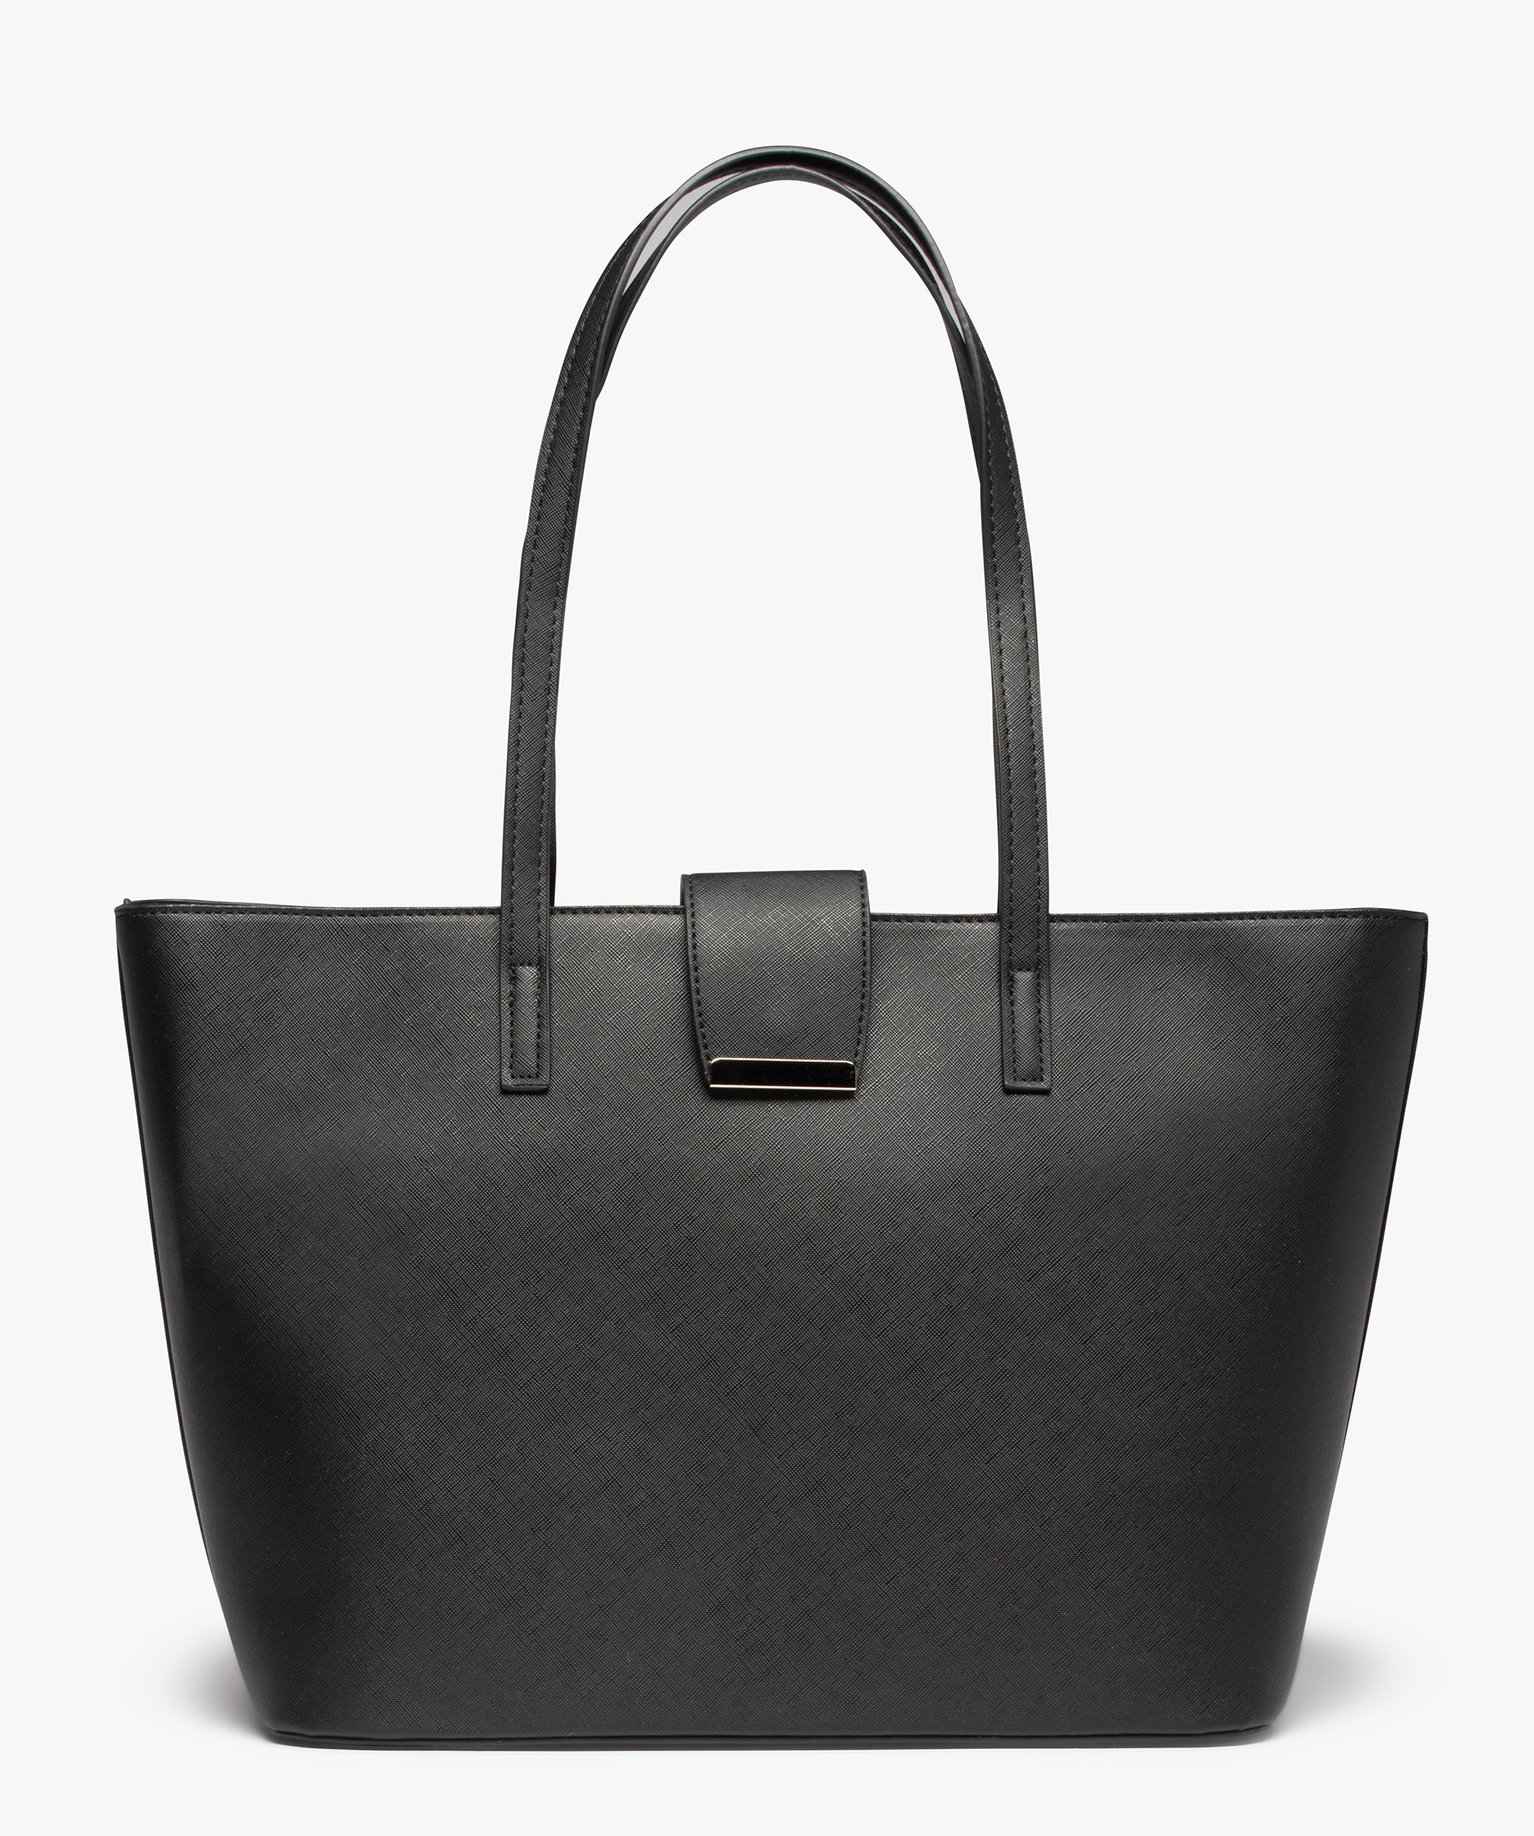 sac cabas rigide en matiere texturee femme noir sacs a main